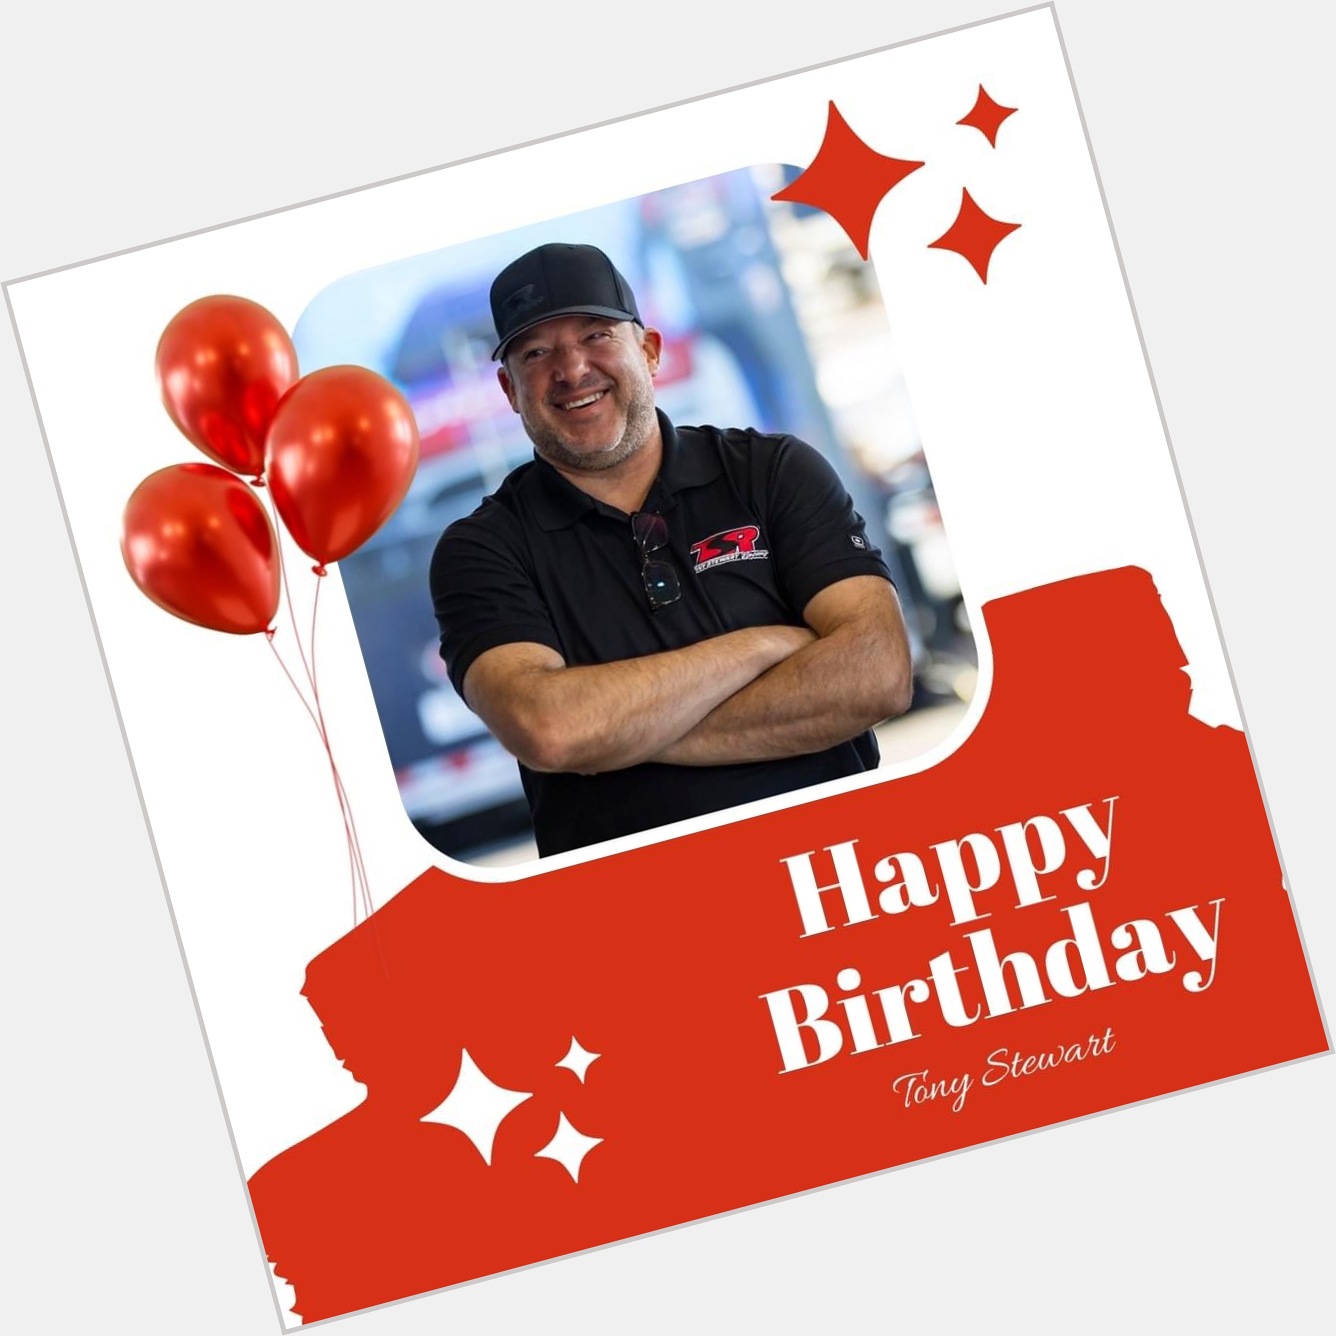 Join us in wishing the boss man Tony Stewart a very happy birthday!  | NHRA | Dodge | Mopar 